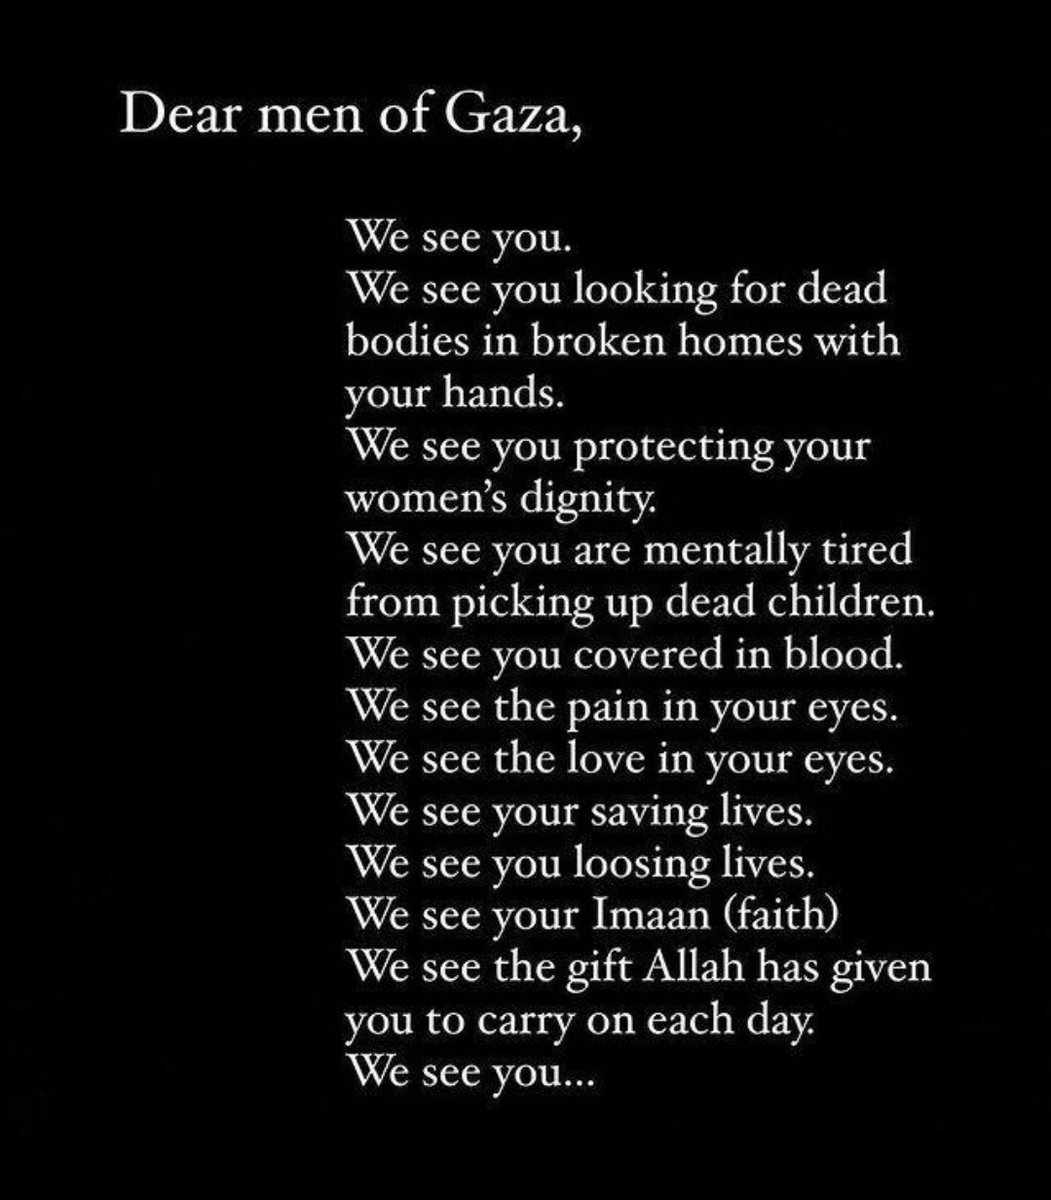 We See you,Men of Gaza. 🫡
#CeasefireNOW #PalestineBleeding